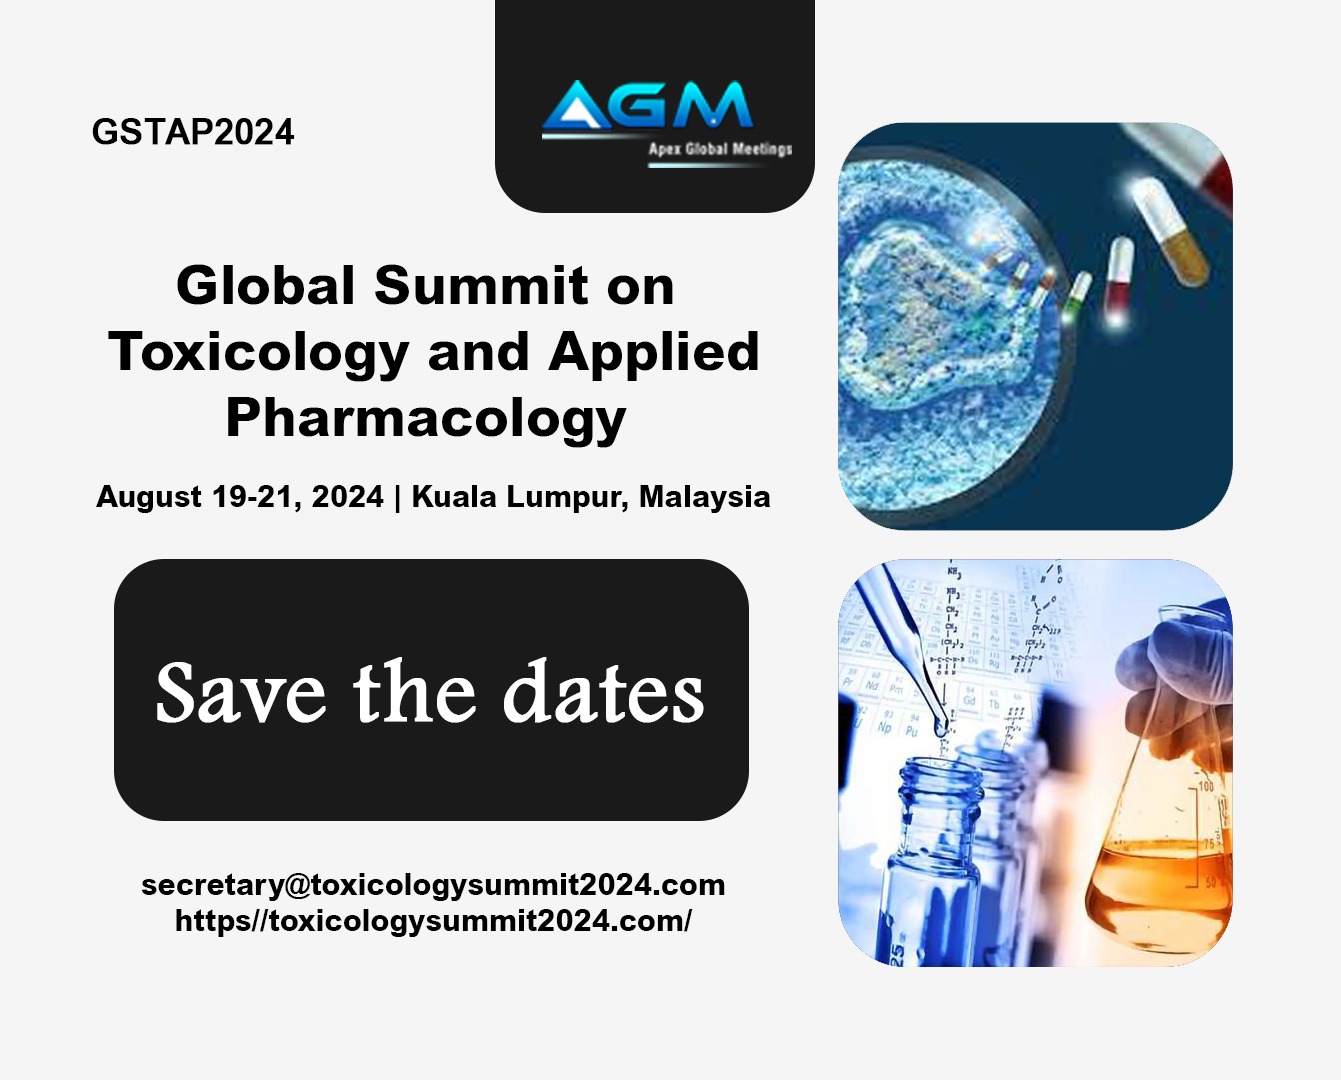 Global Summit on Toxicology and Applied Pharmacology GSTAP2024, Kuala Lumpur, Malaysia